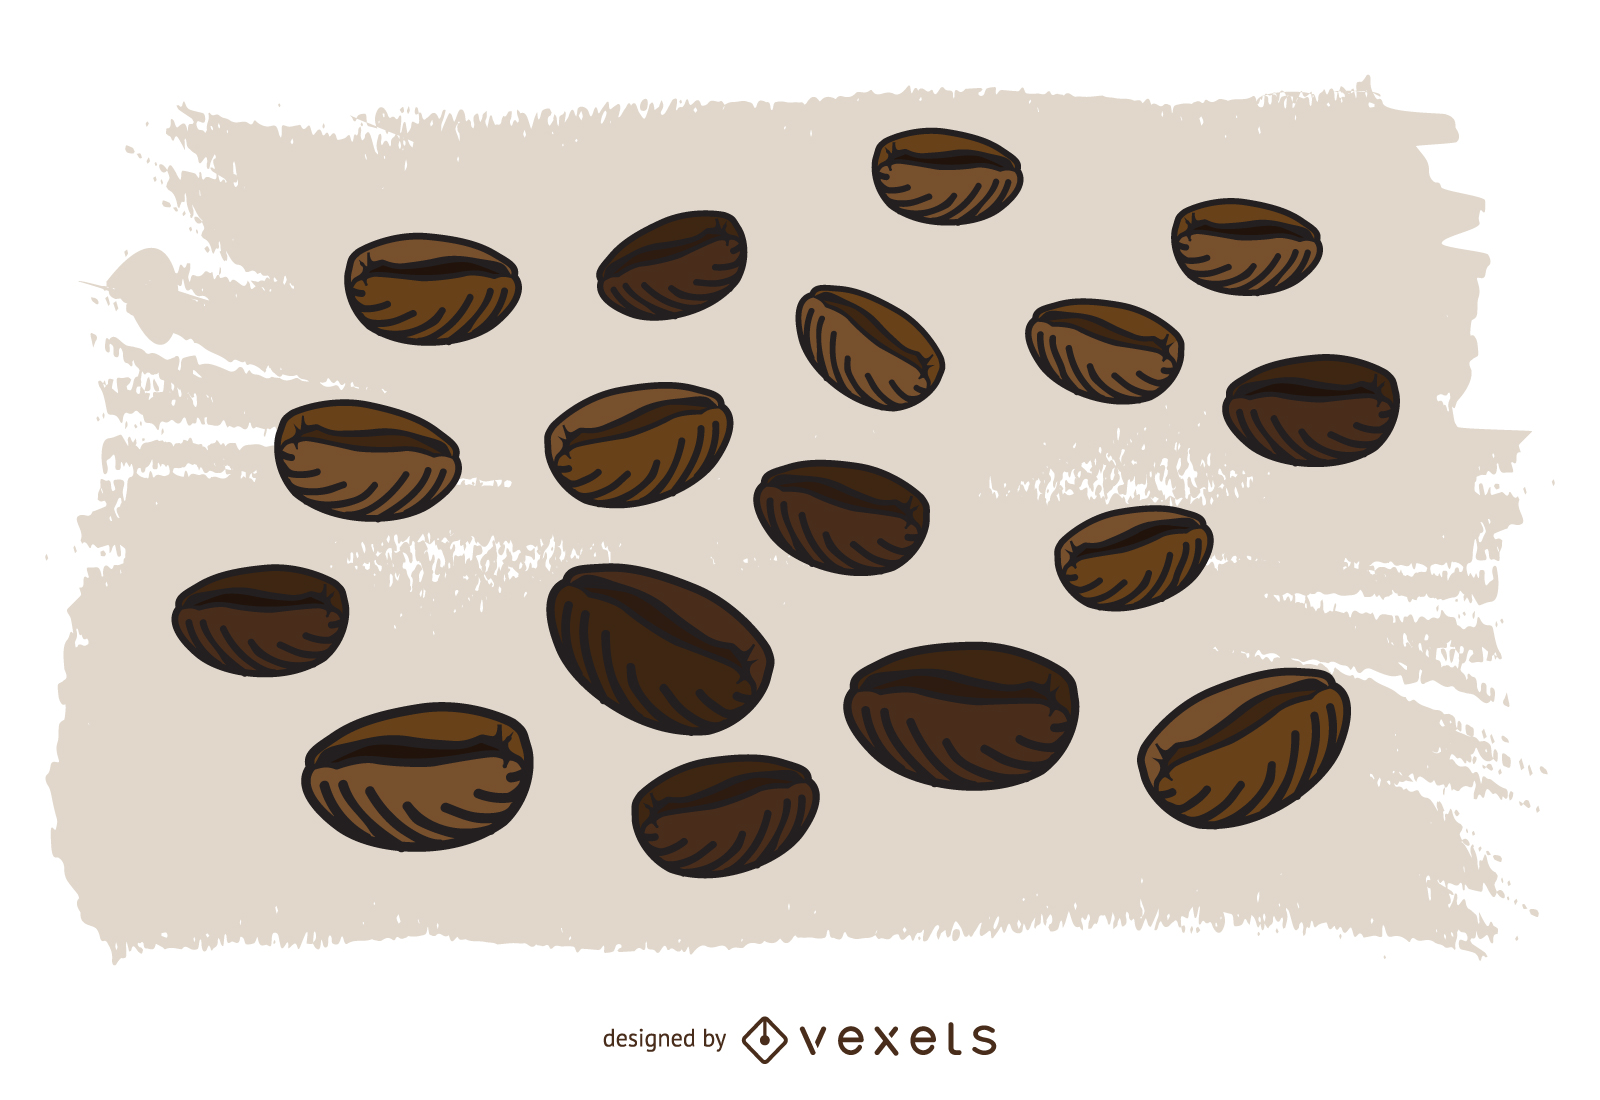 Vector Coffee Beans